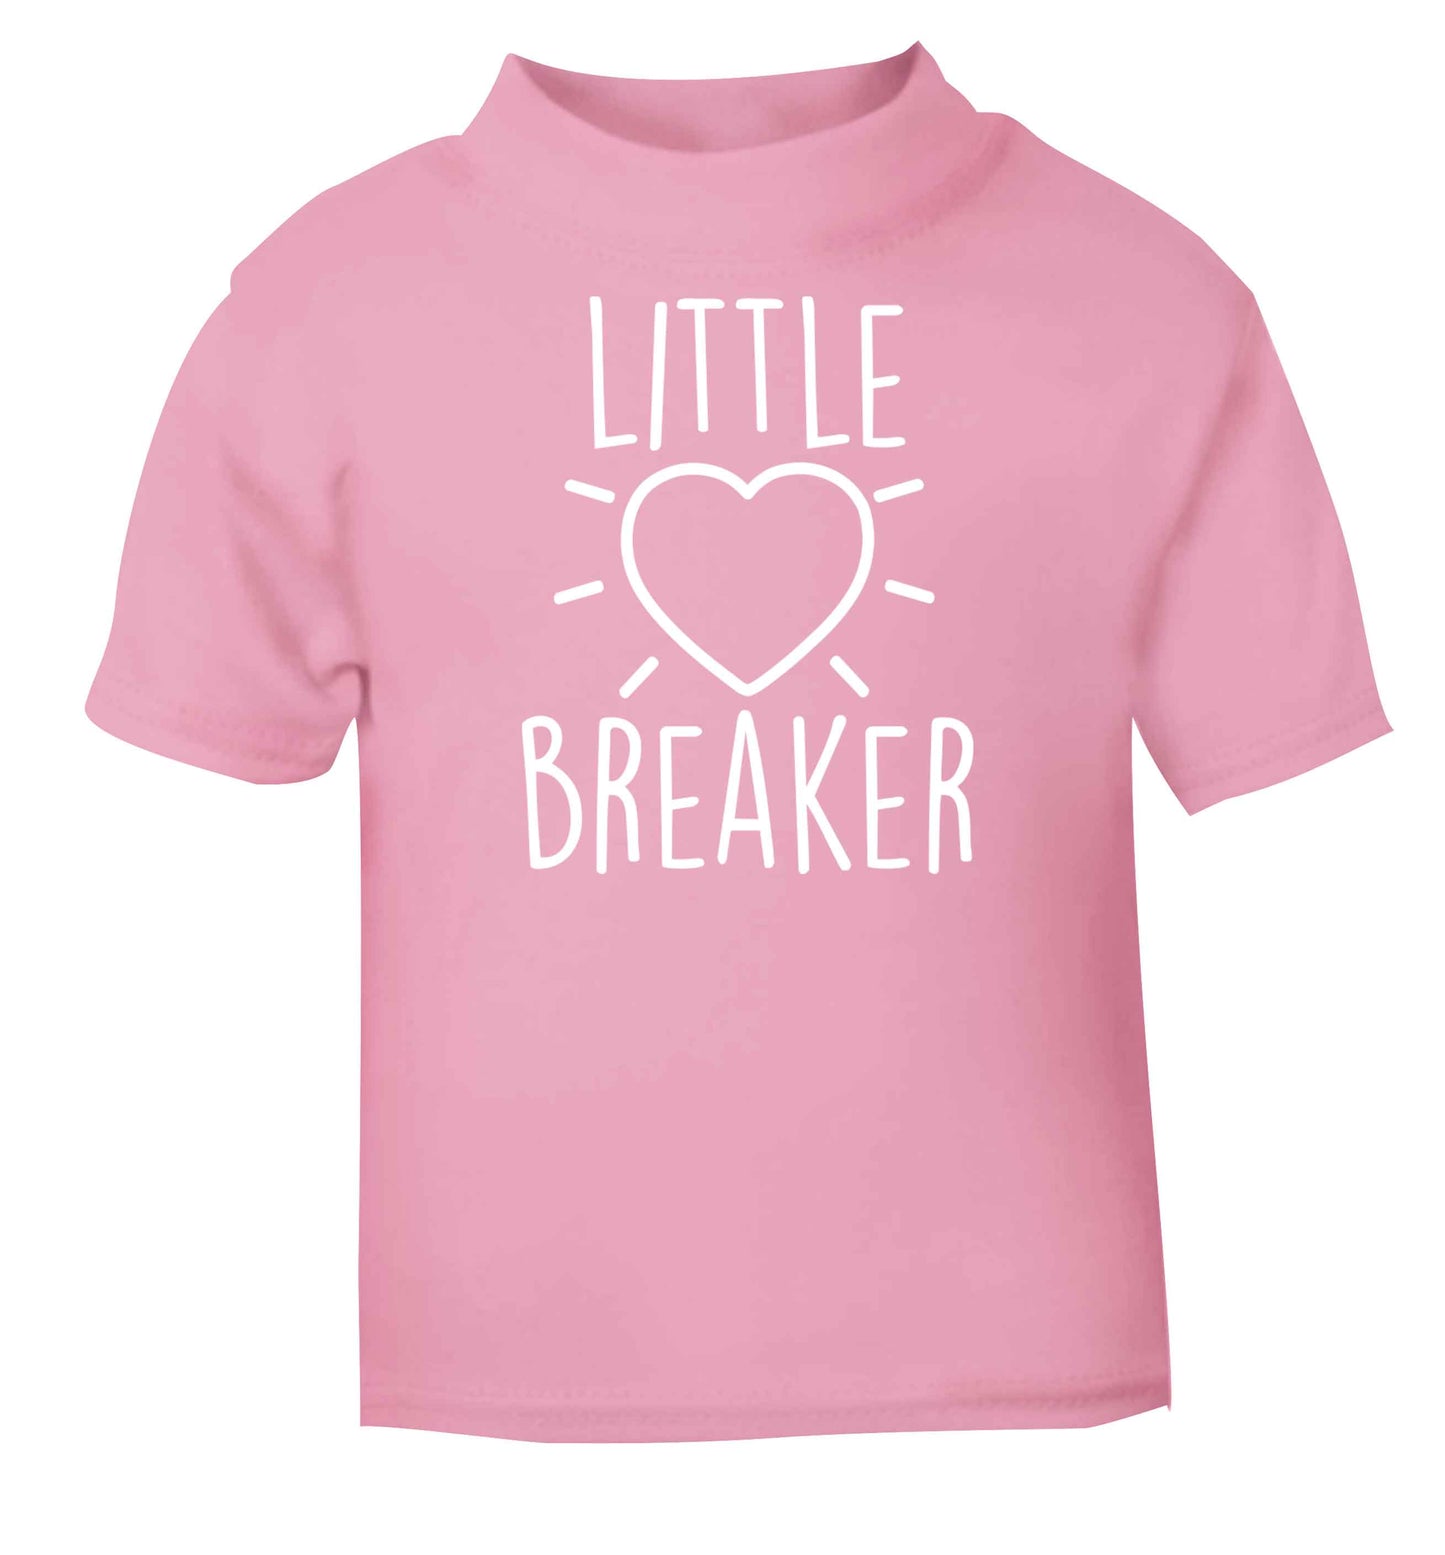 Little heartbreaker light pink baby toddler Tshirt 2 Years